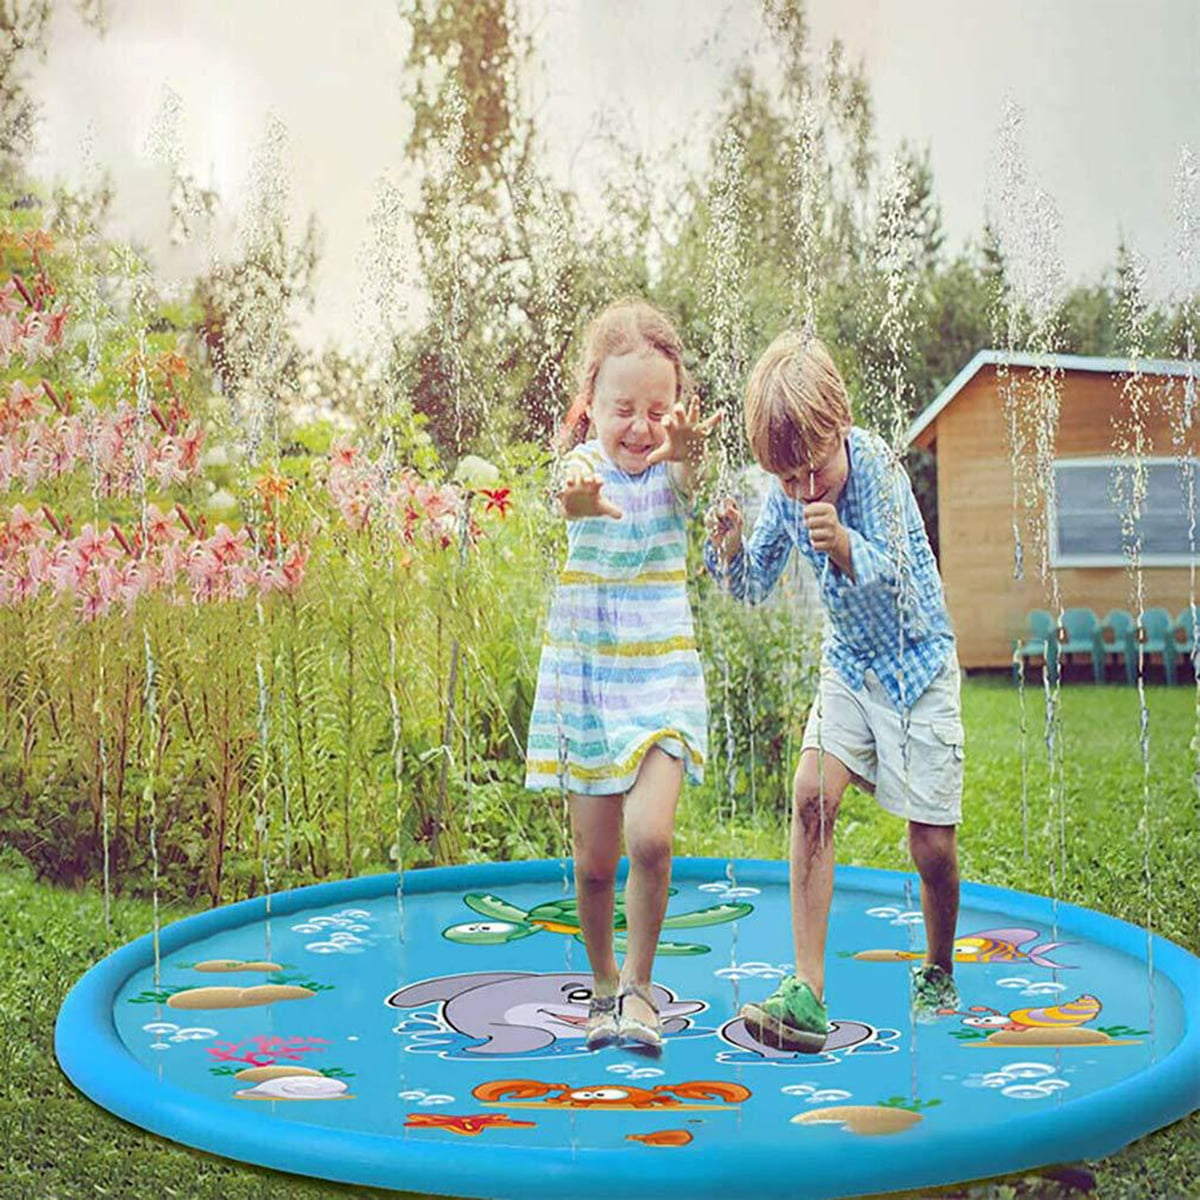 Outdoor Lawn Beach Sea Animal Inflatable Water Spray Kids Sprinkler Play Pad Mat